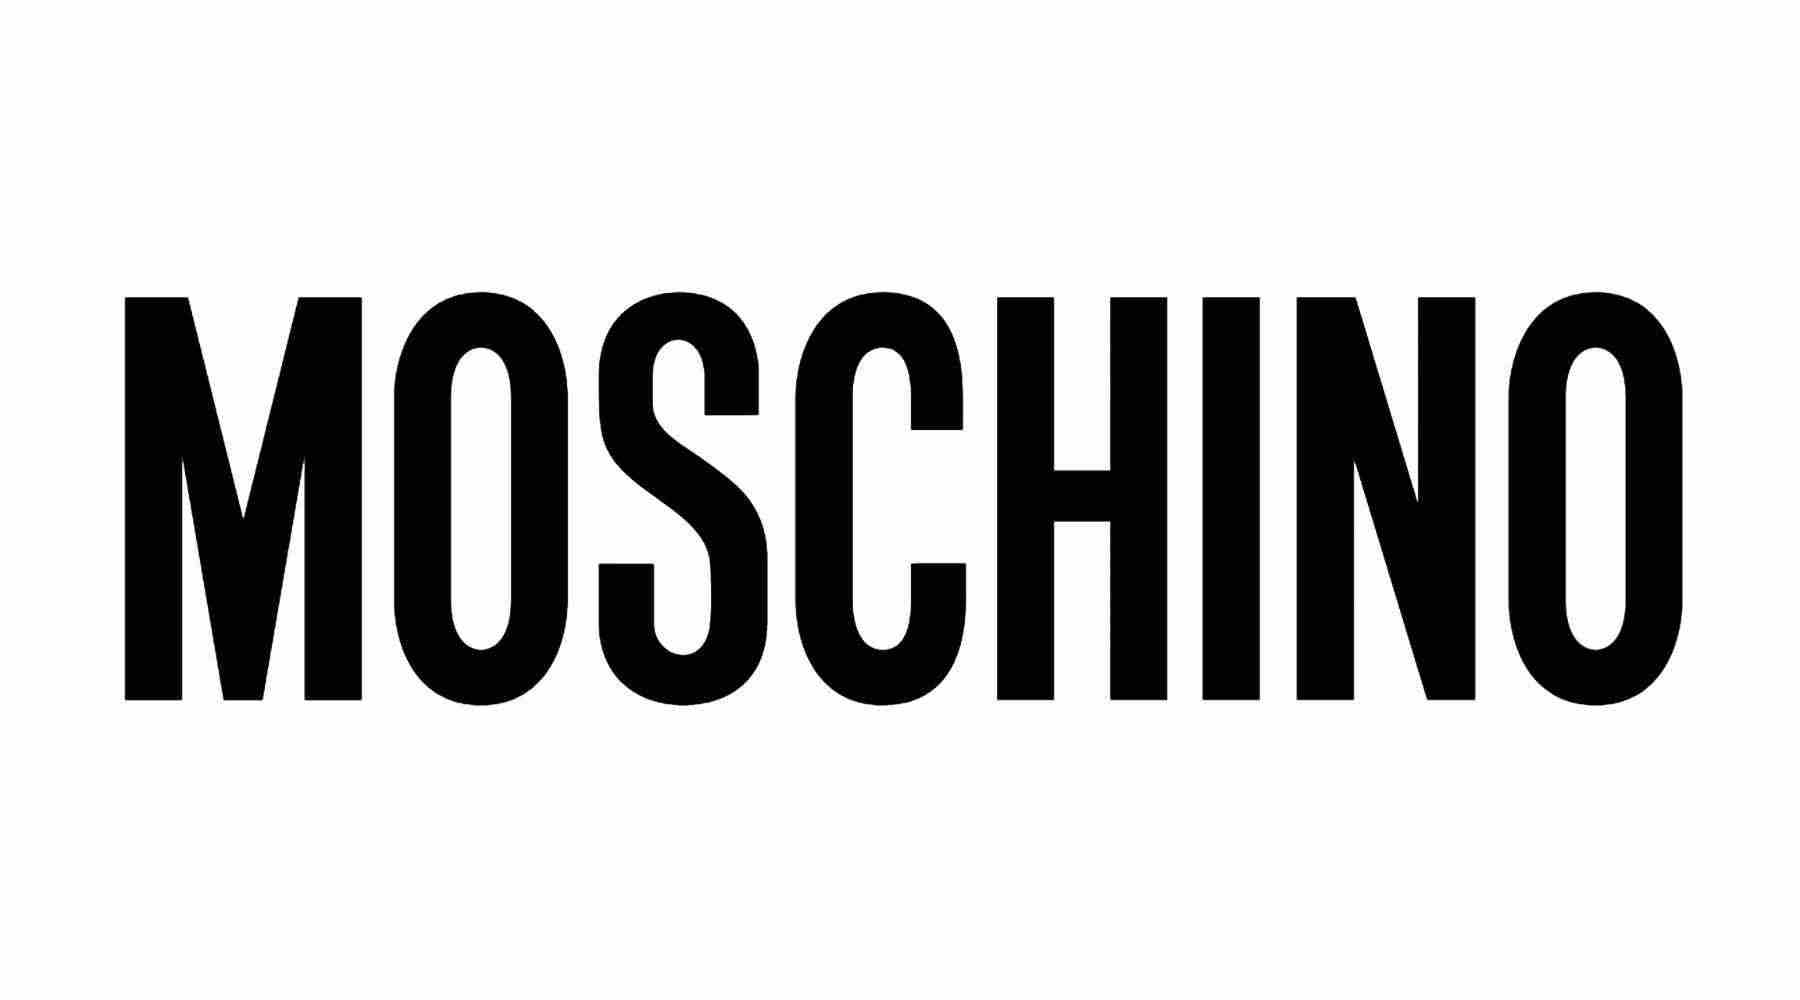 Logo of Moschino